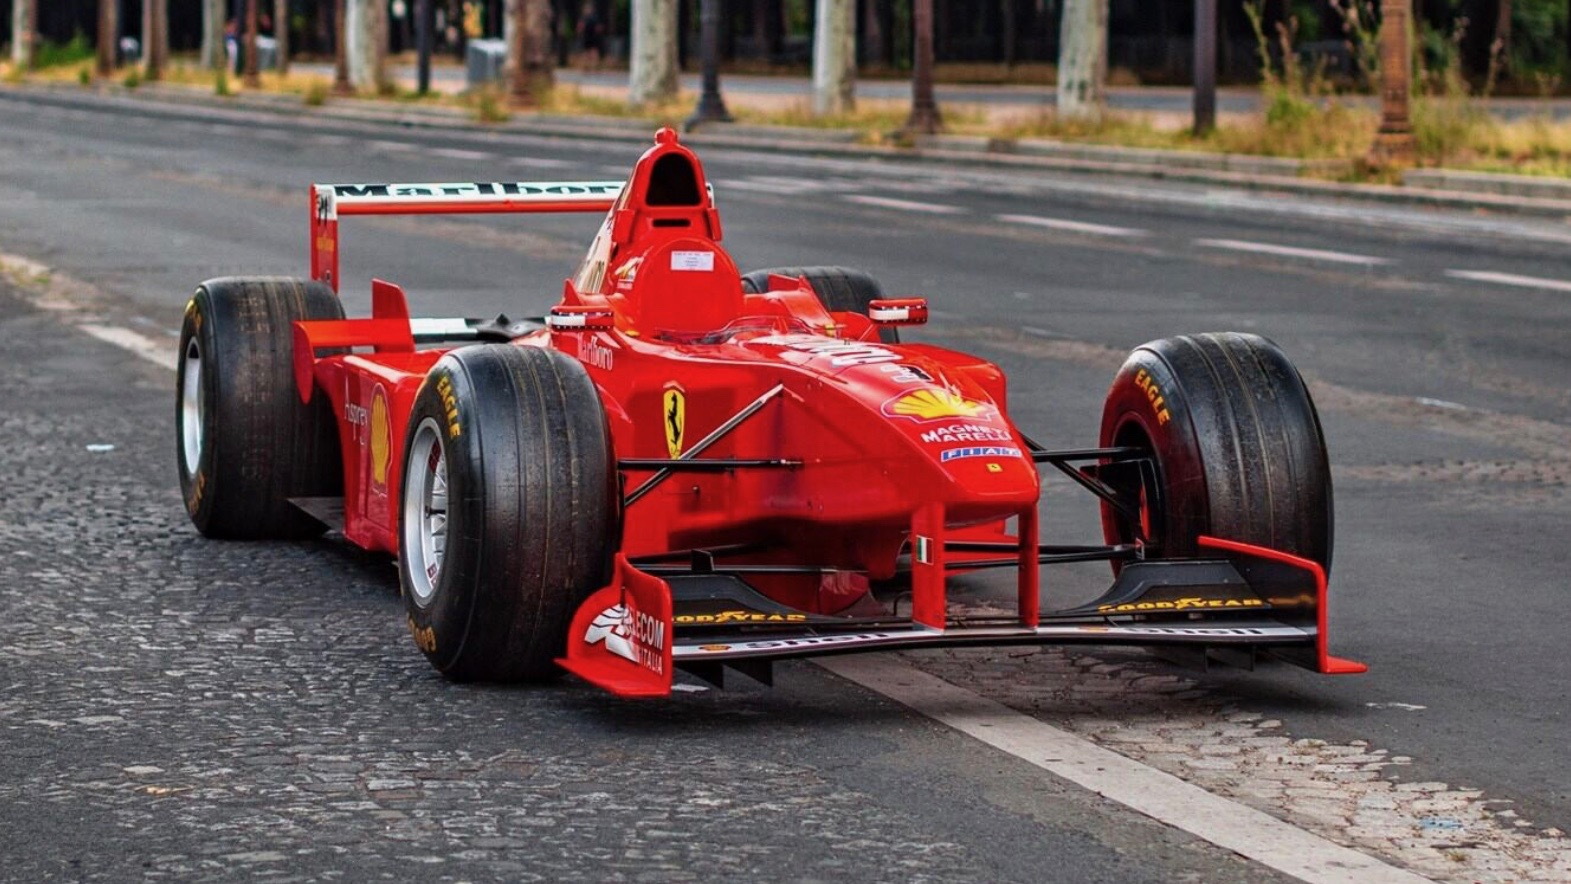 1998 Ferrari F300 chassis 187 driven by Michael Schumacher (photo via RM Sotheby's)